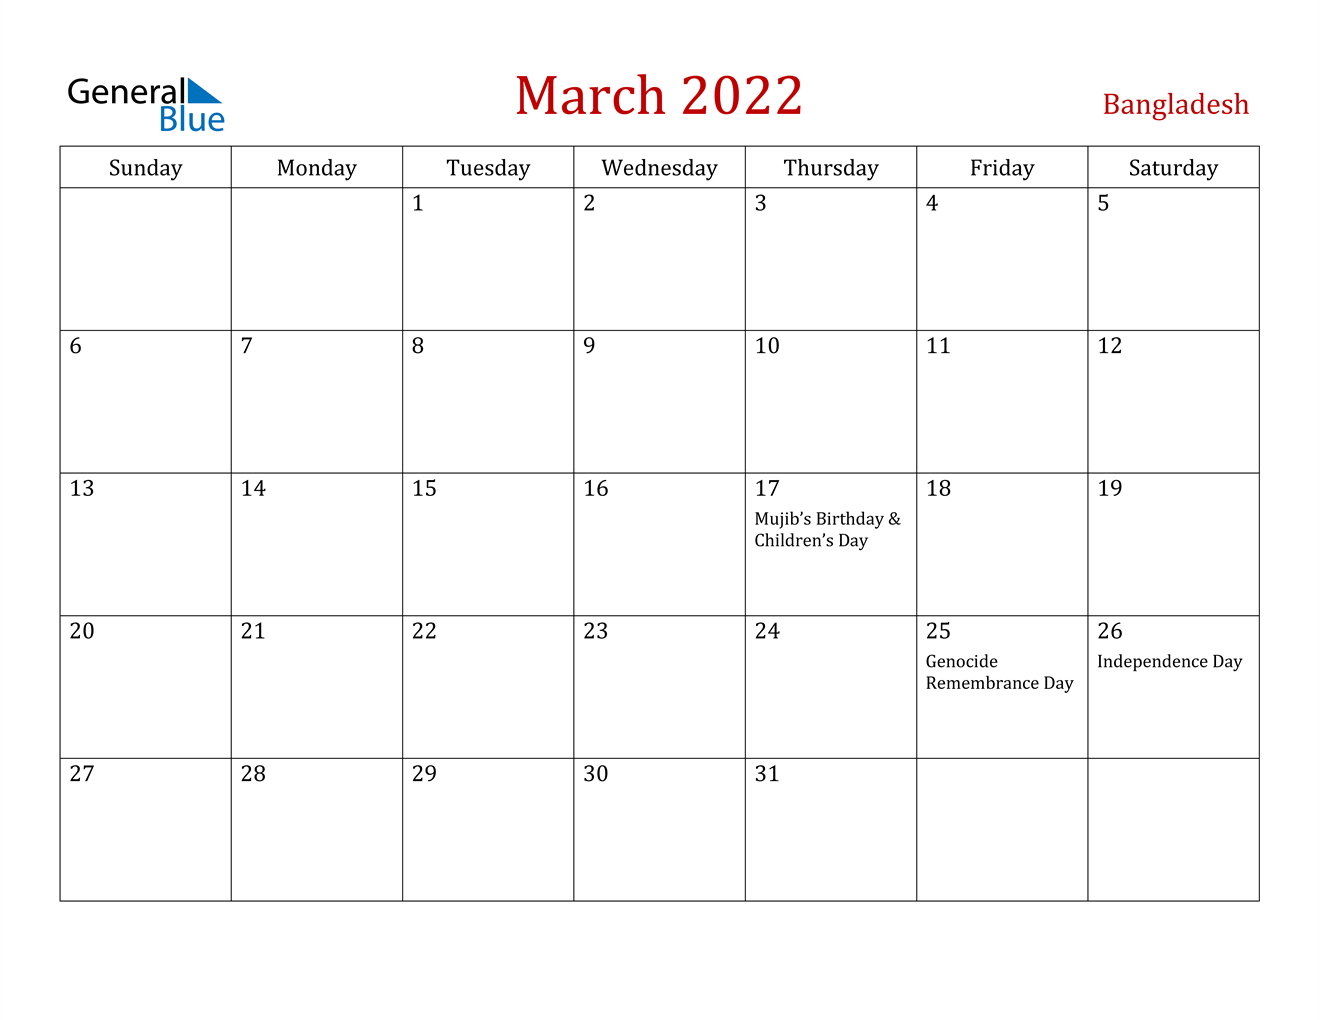 Bangladesh March 2022 Calendar With Holidays